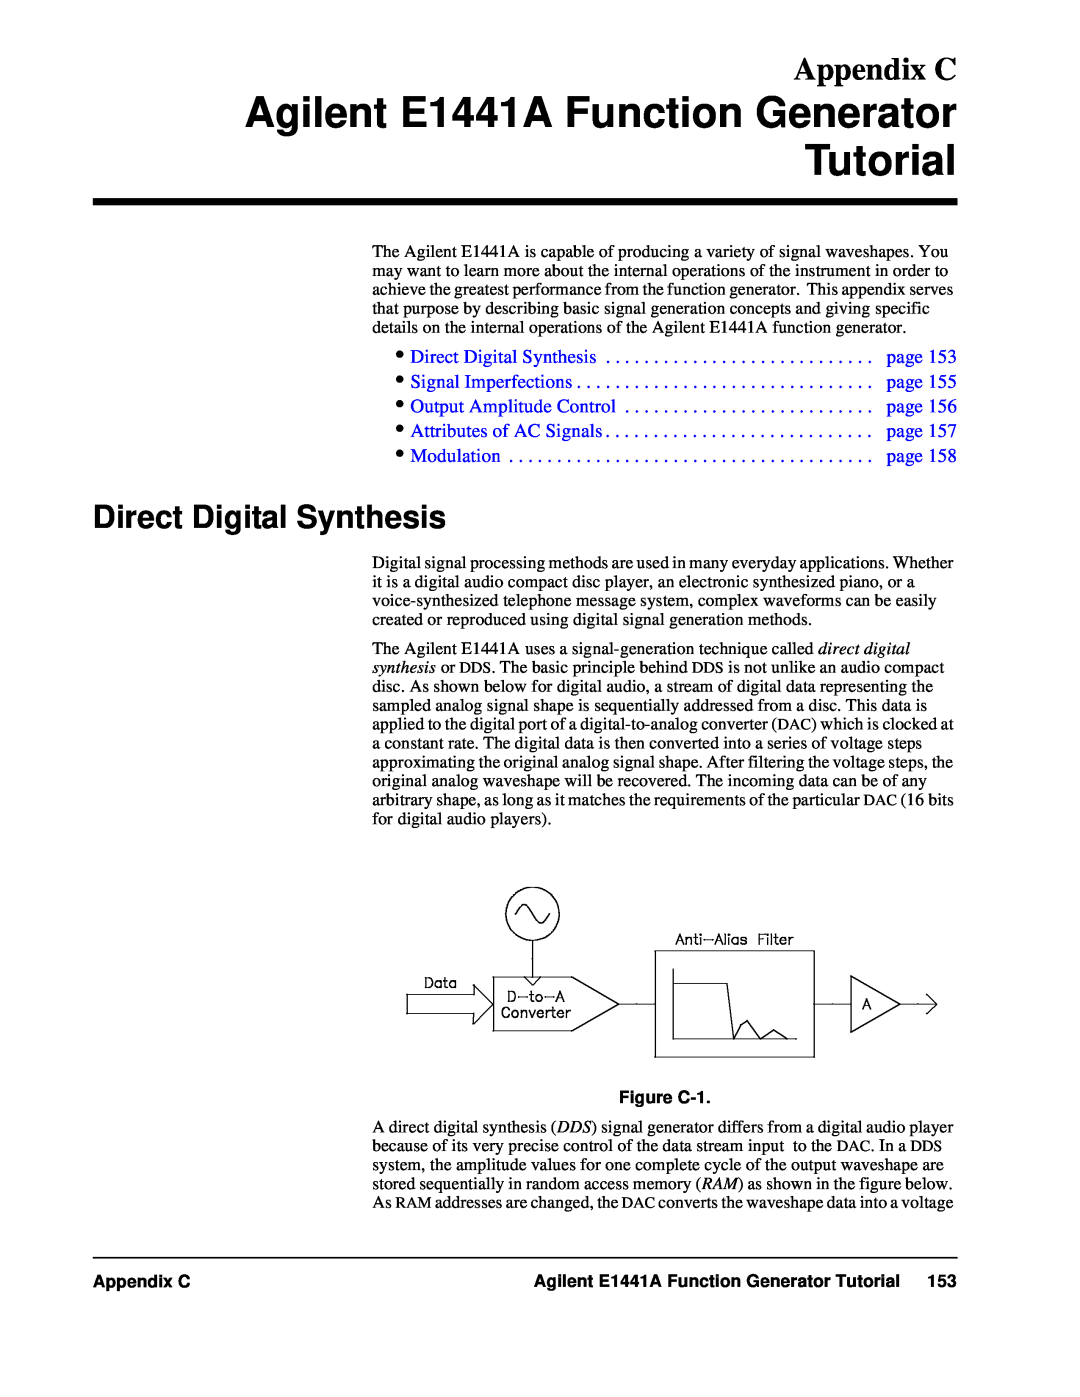 Agilent Technologies user service Agilent E1441A Function Generator Tutorial, Appendix C, Direct Digital Synthesis 